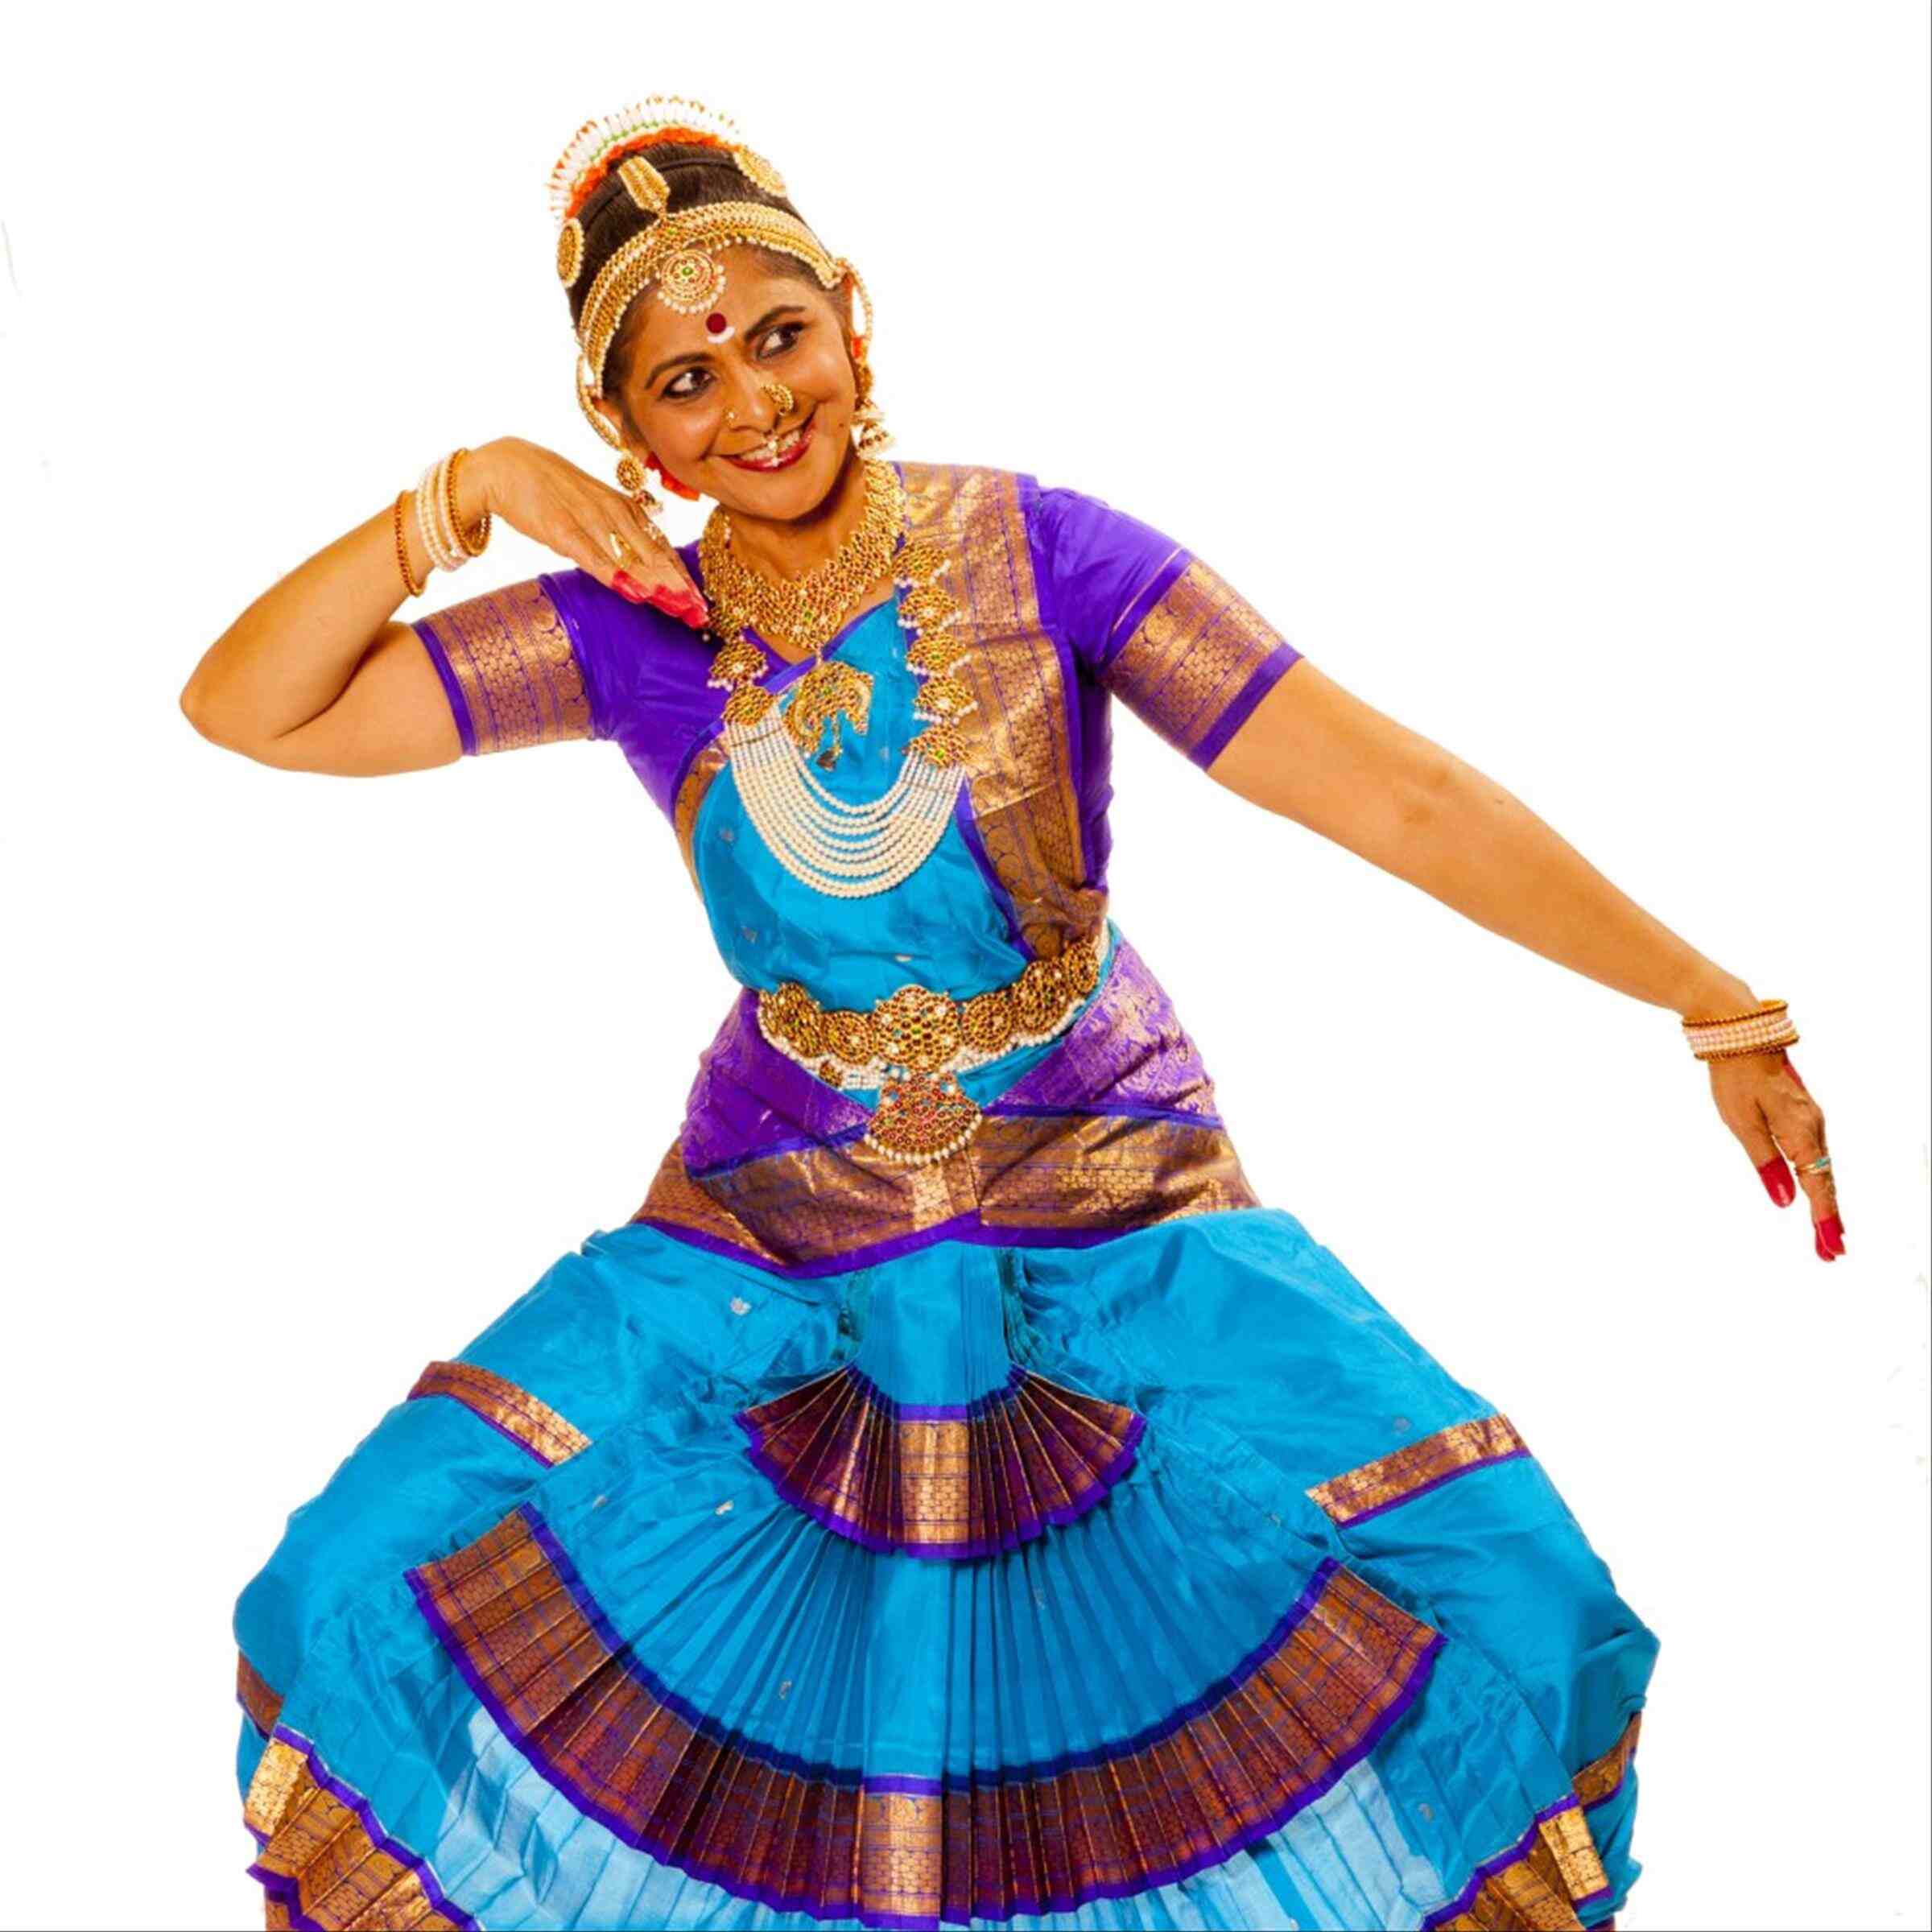 PAST EVENT - INDIAN CLASSICAL/SEMI-CLASSICAL DANCE